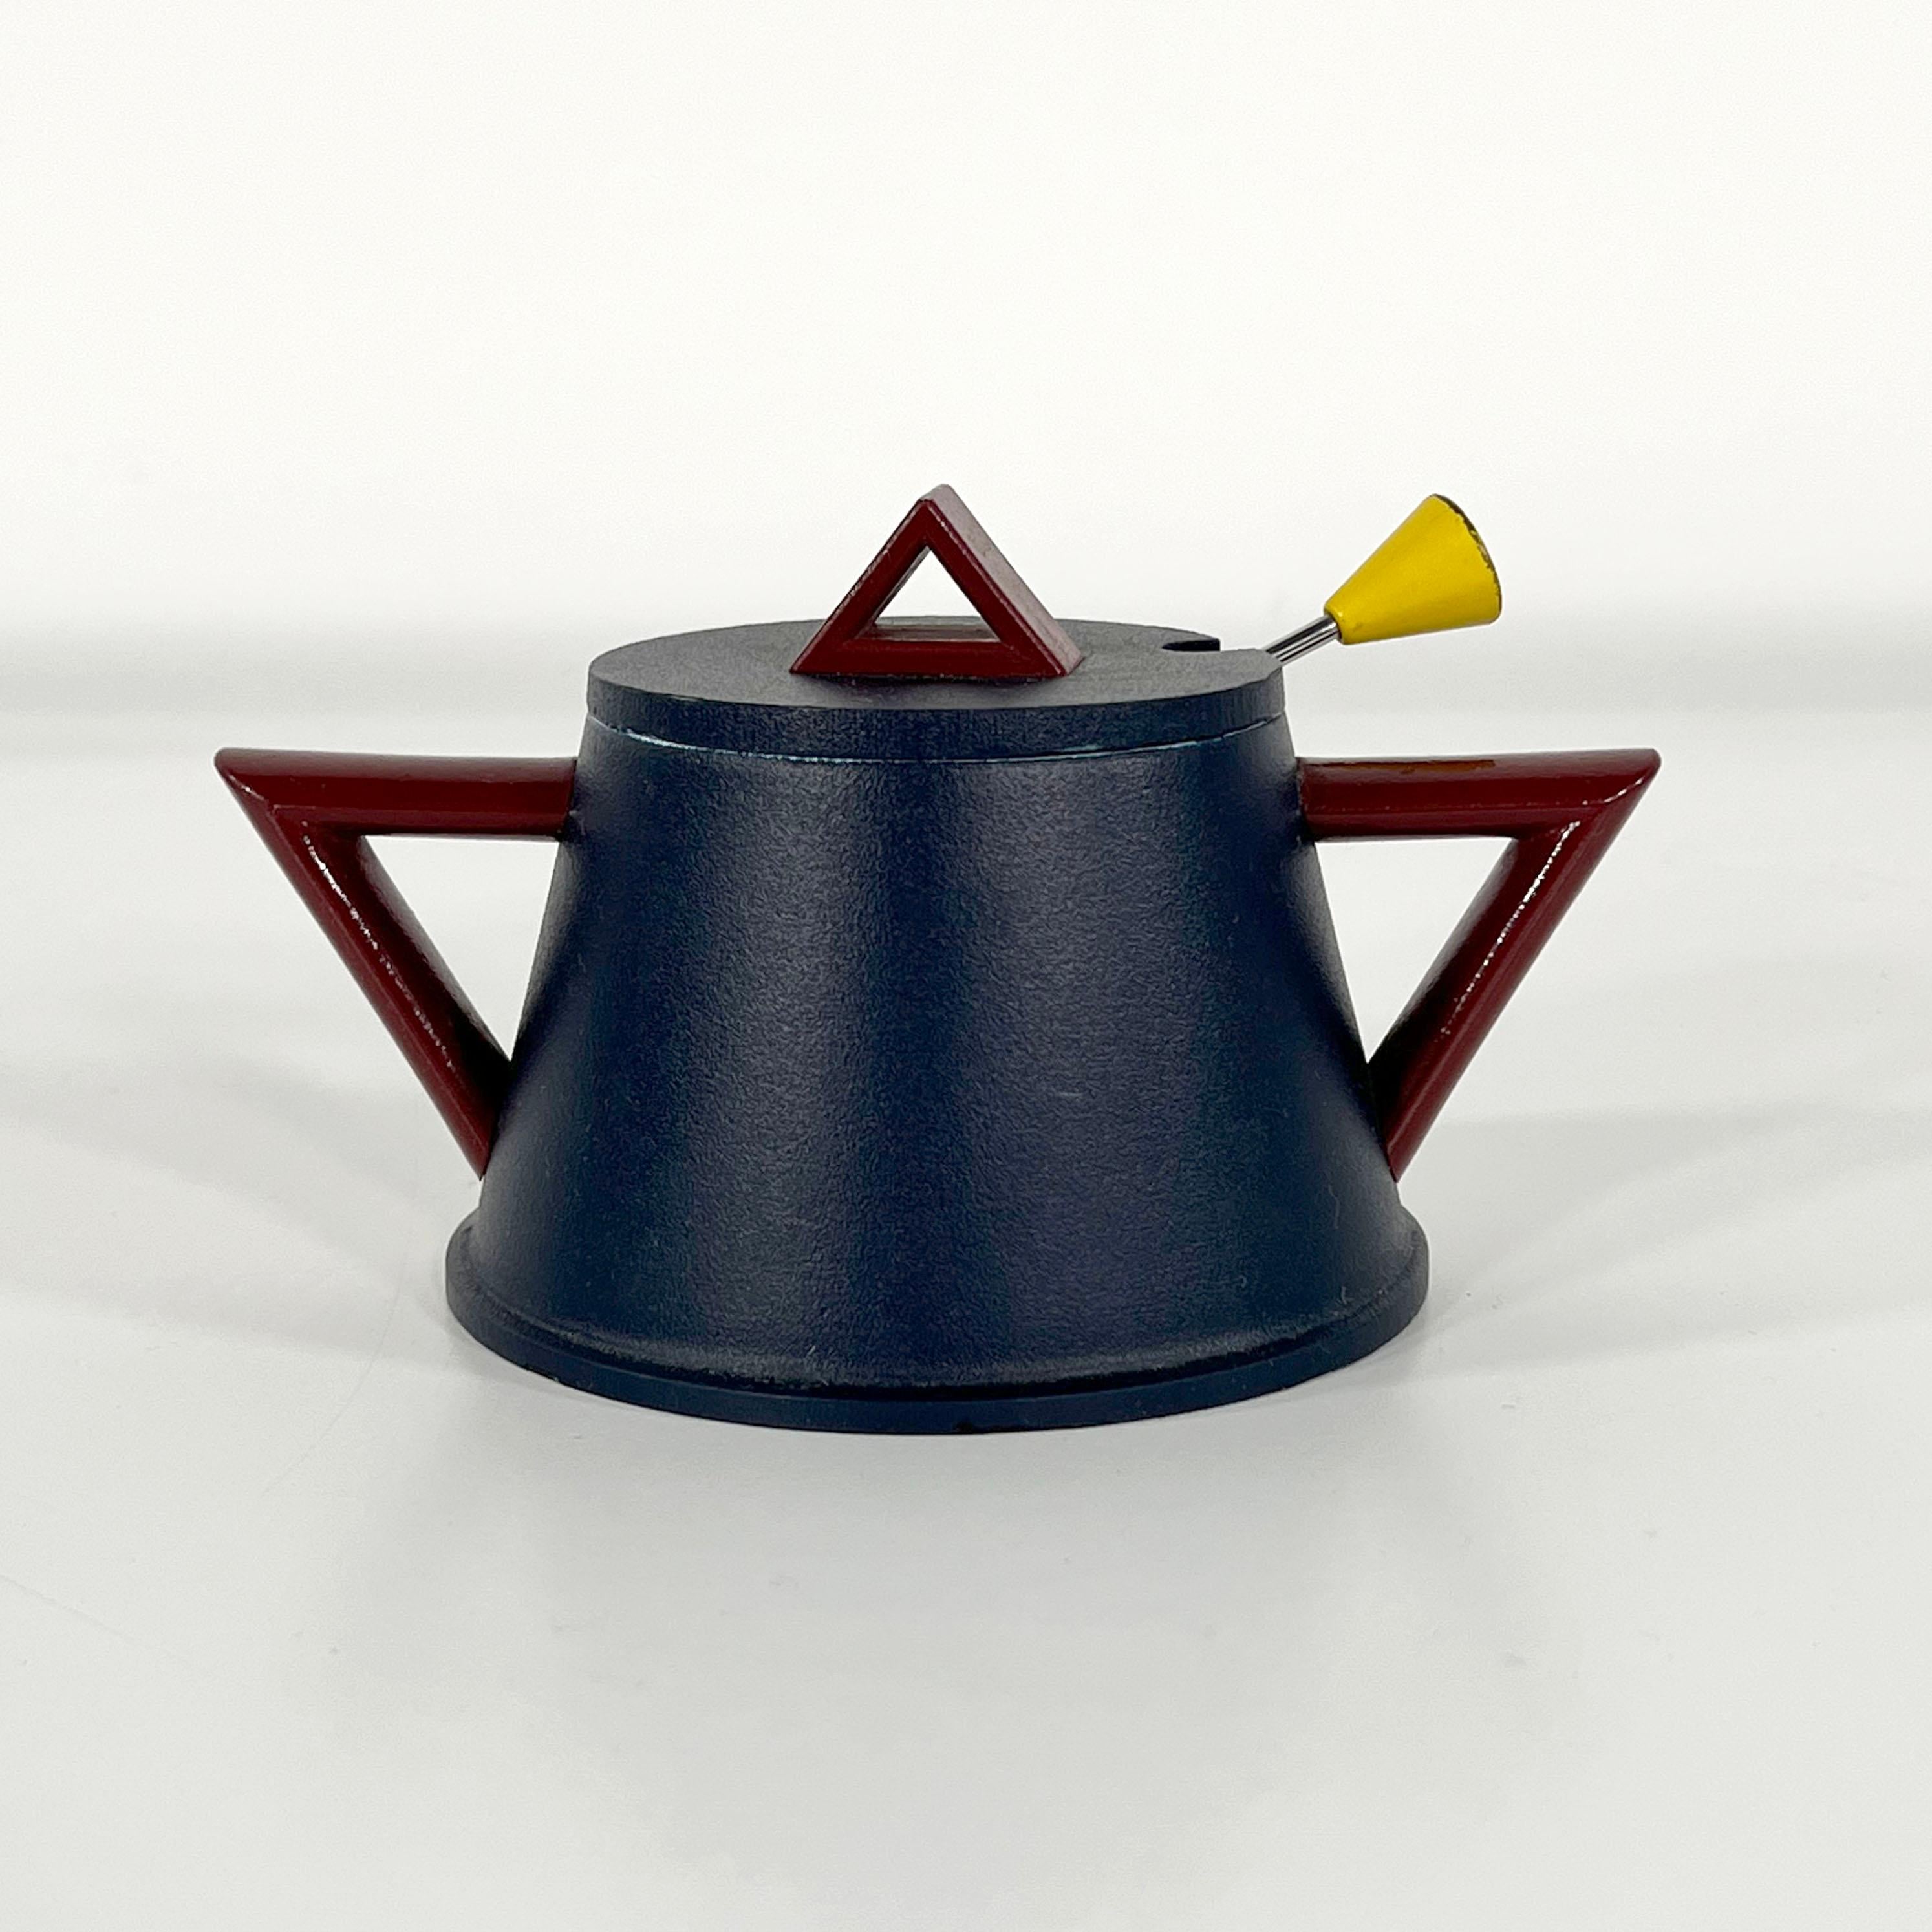 Designer - Ettore Sottsass
Producer - Lagostina
Model - Sugar Bowl 